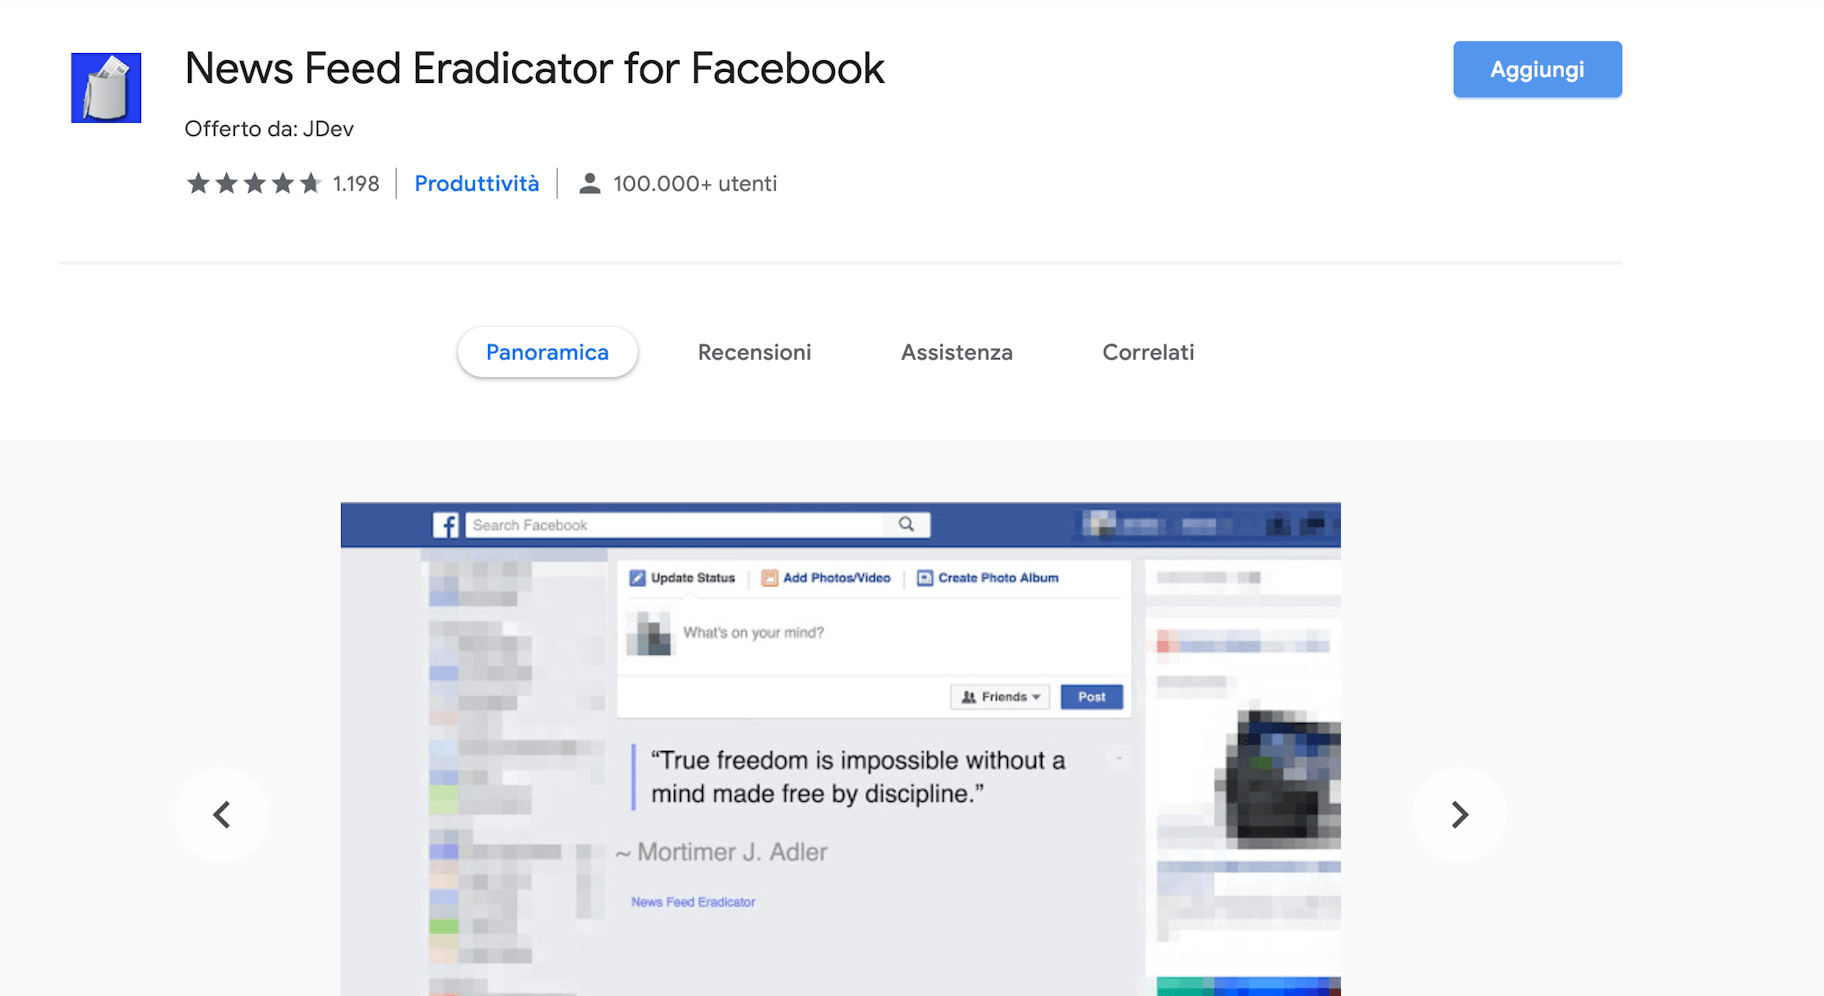 News feed eradicator for facebook